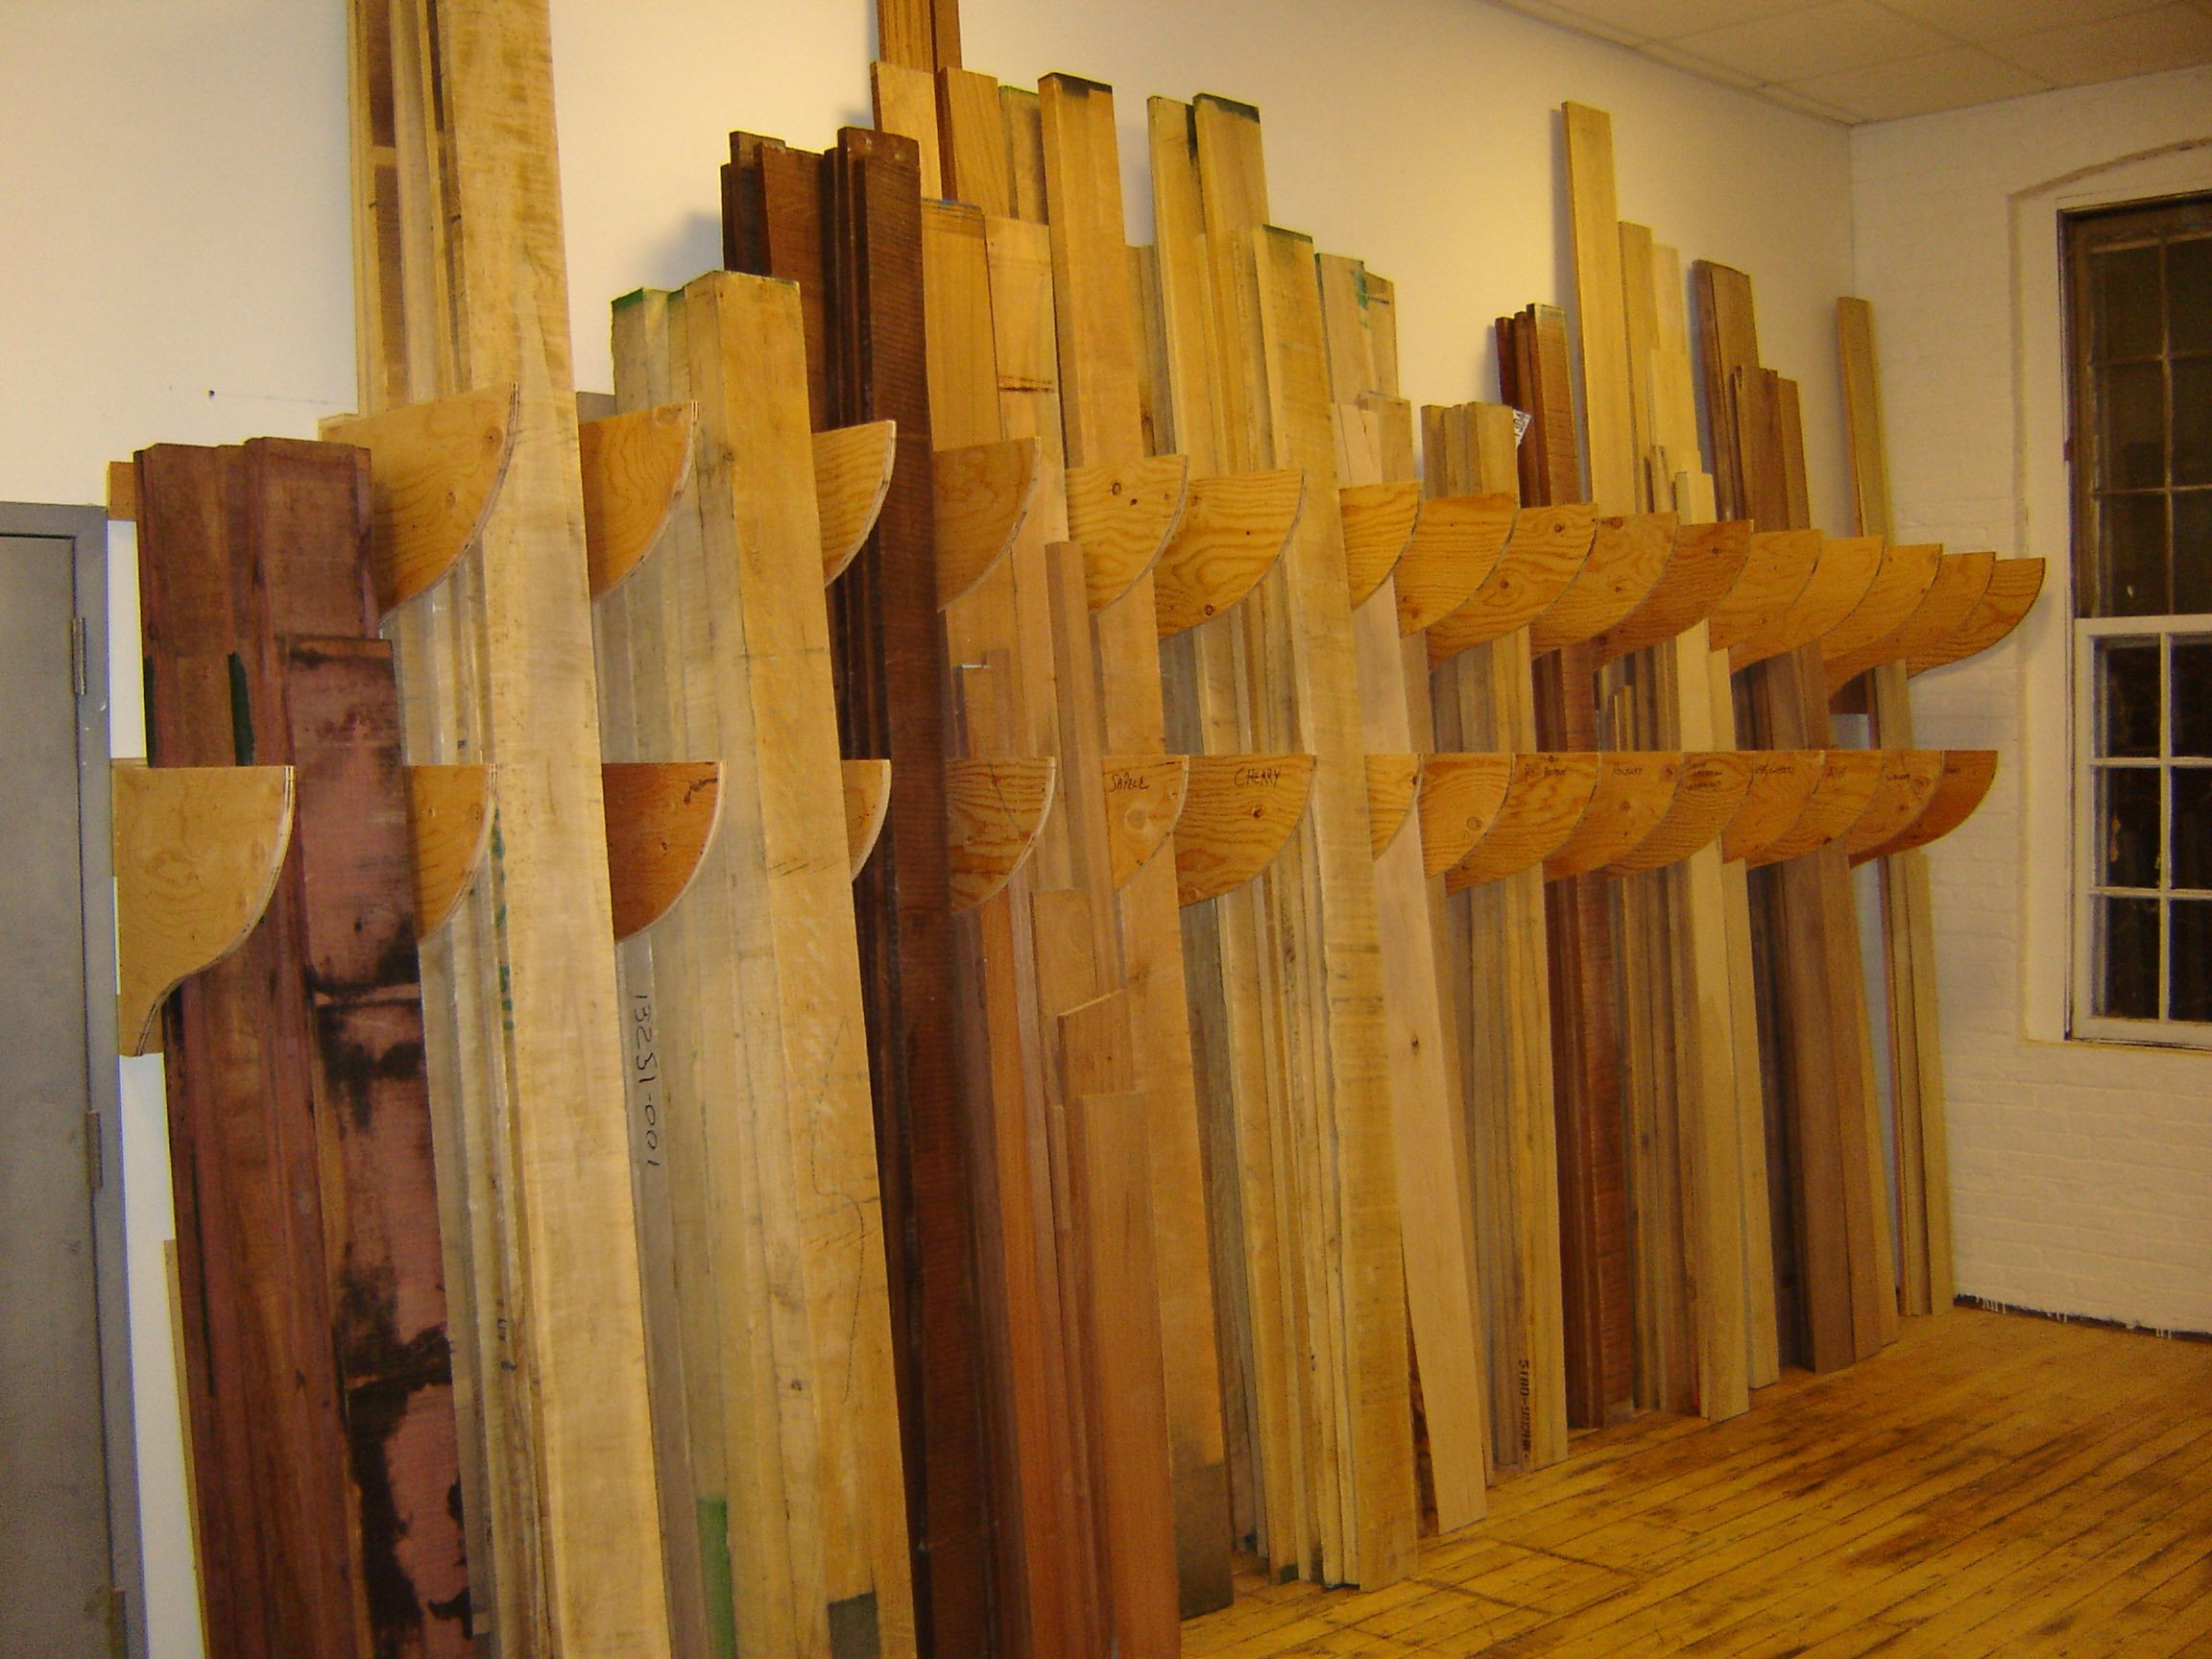 Best ideas about Vertical Lumber Storage
. Save or Pin vertical lumber storage Google Search Now.